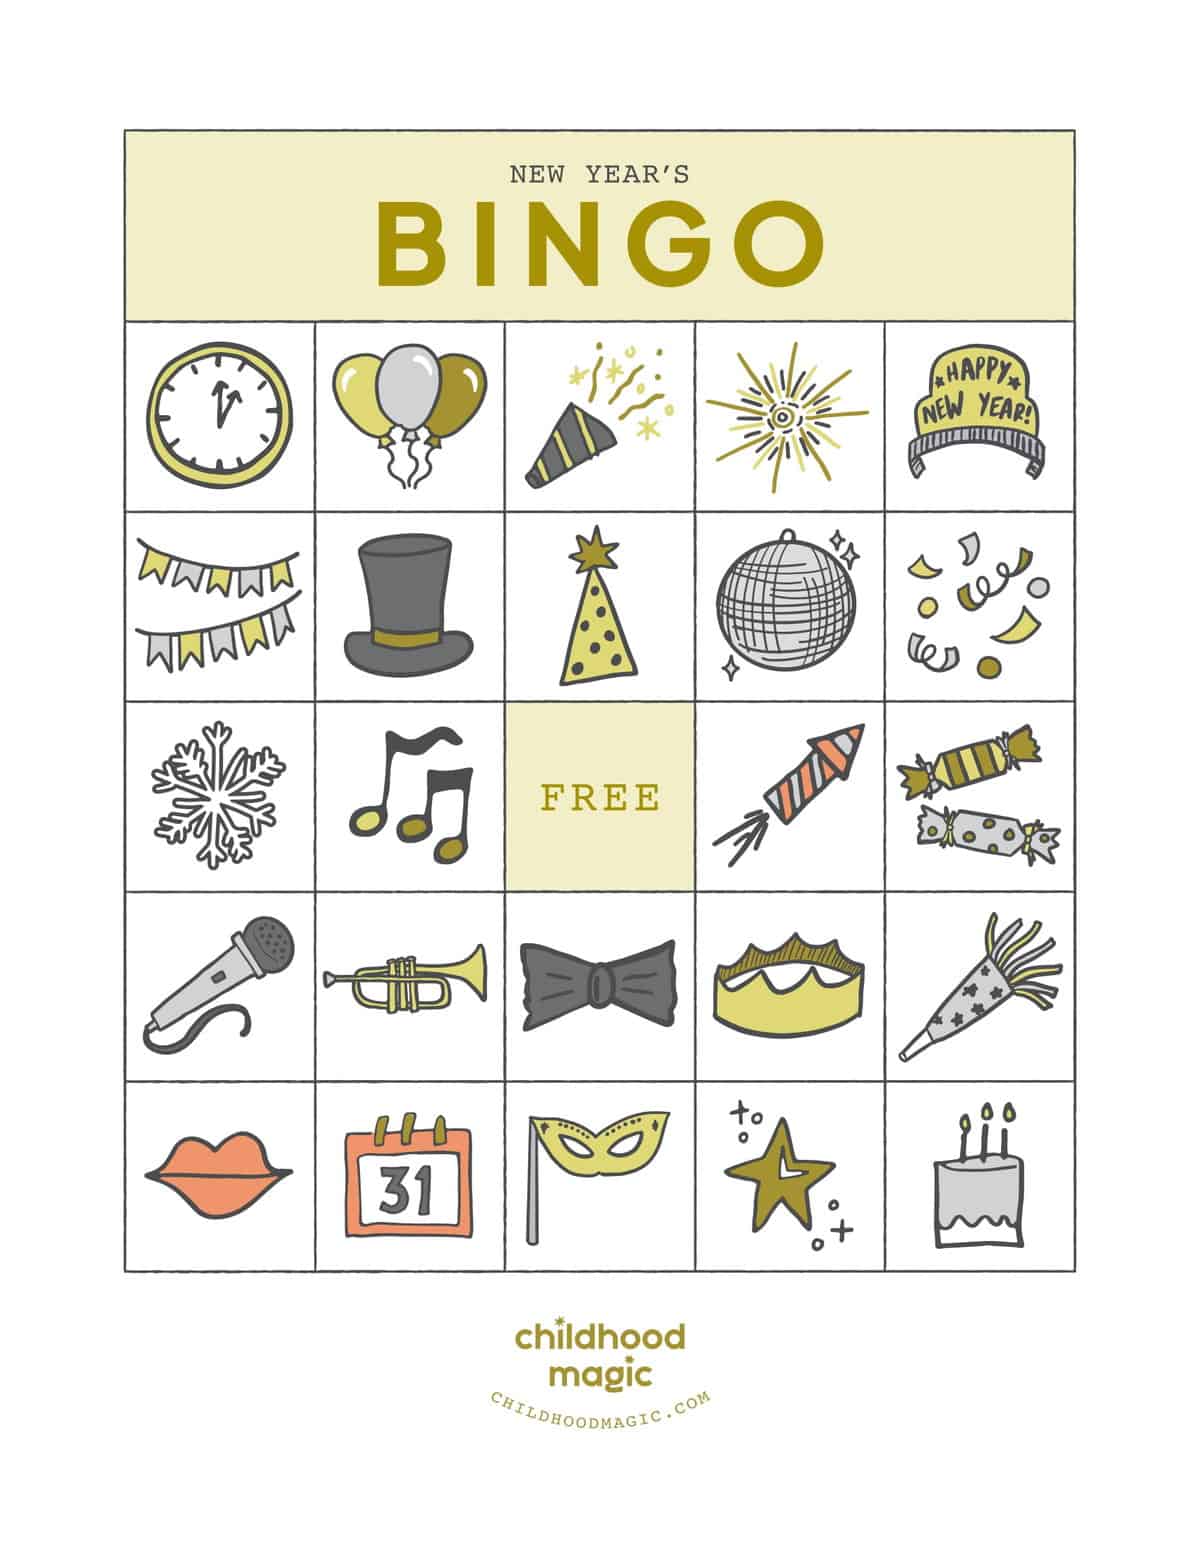 New Years themed bingo card for printing. 